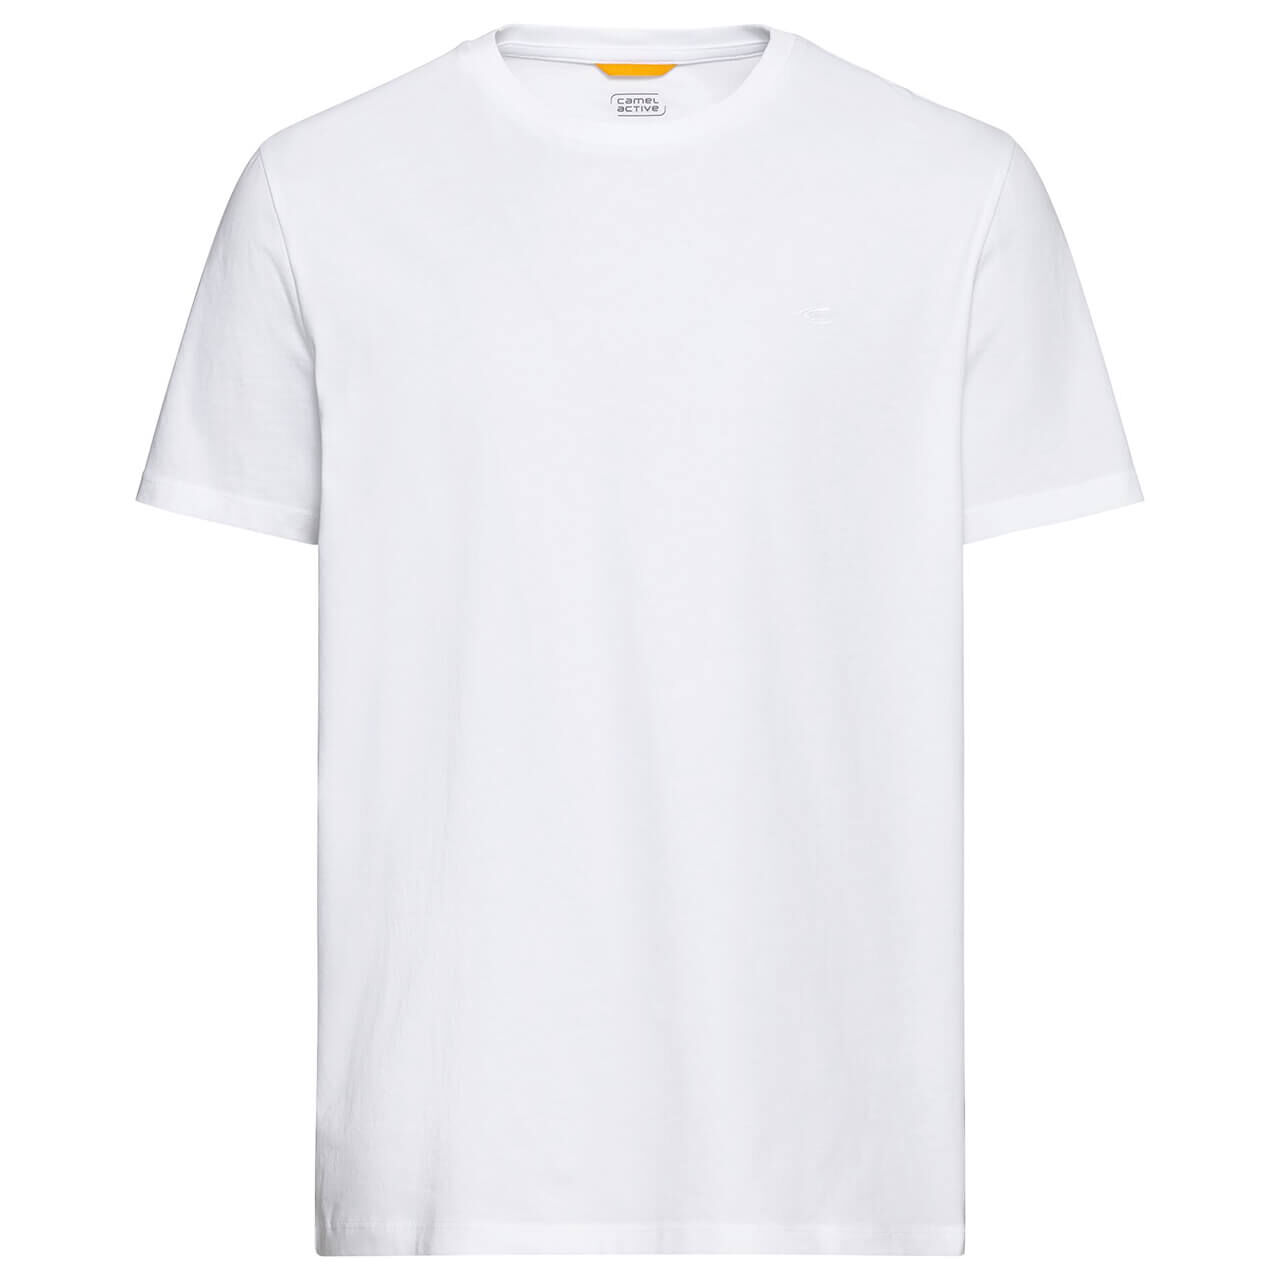 Camel active Herren T-Shirt white